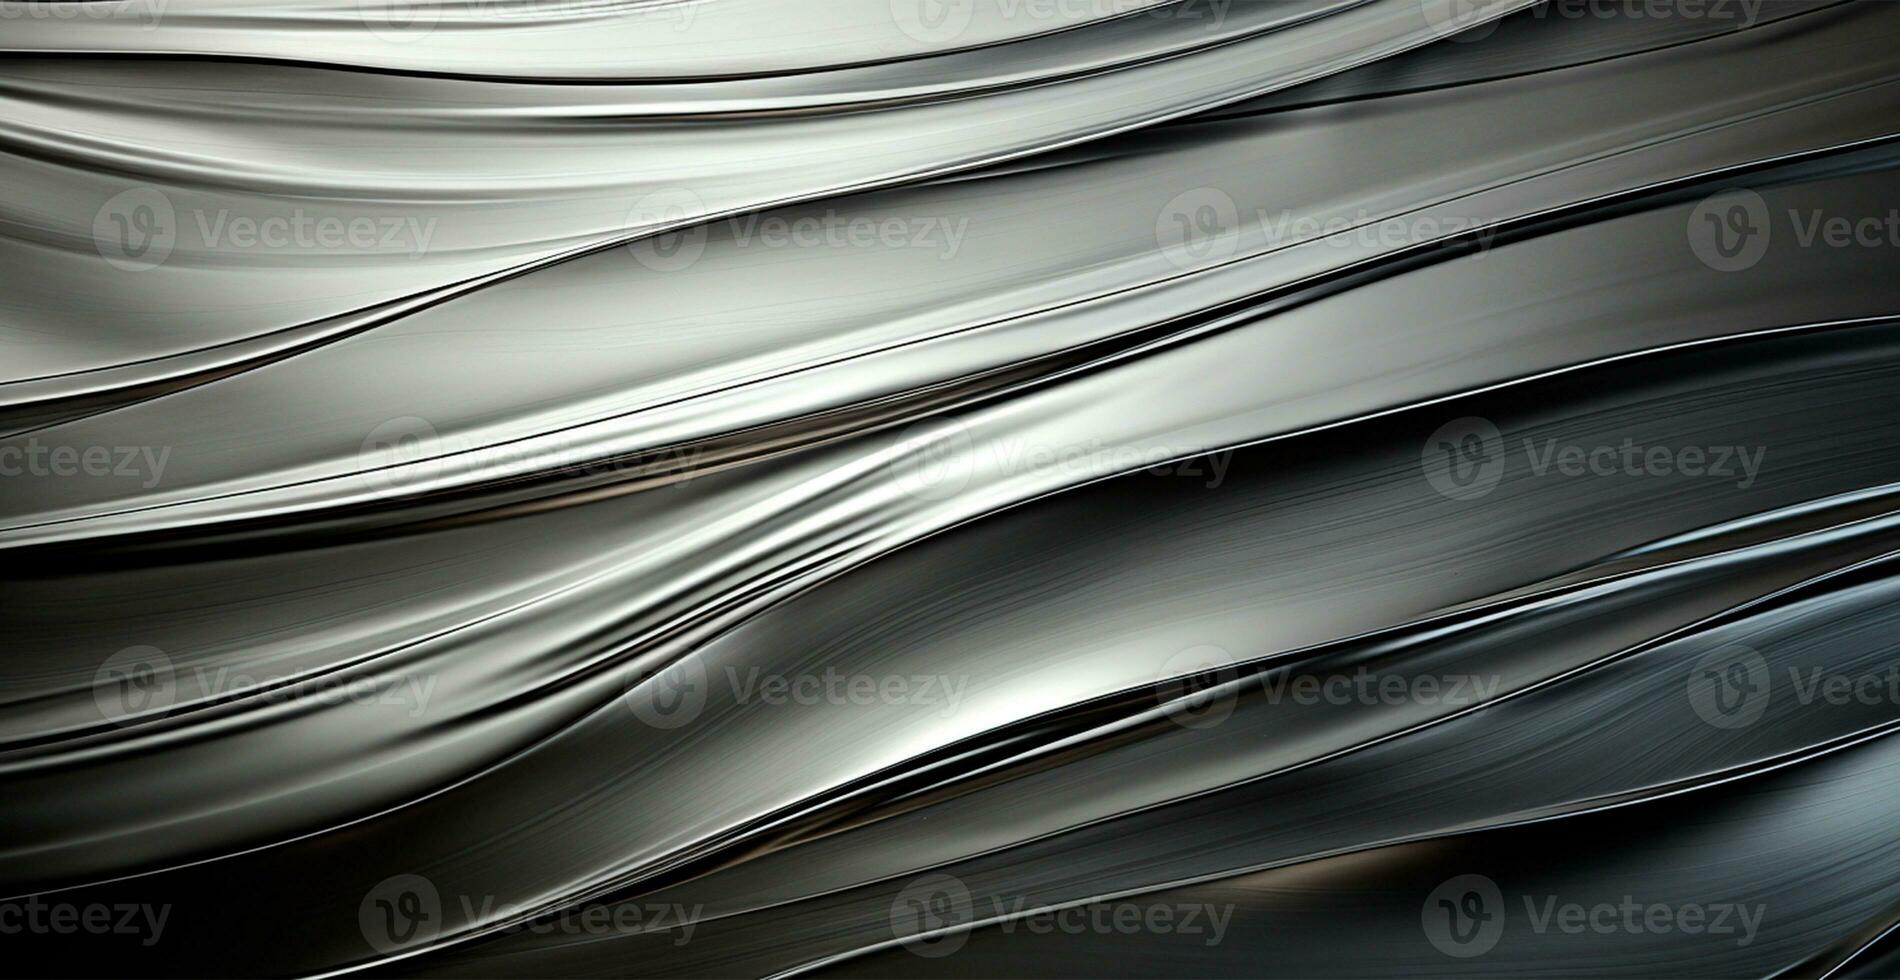 panorama- metall textur, stål silver- bakgrund - ai genererad bild foto